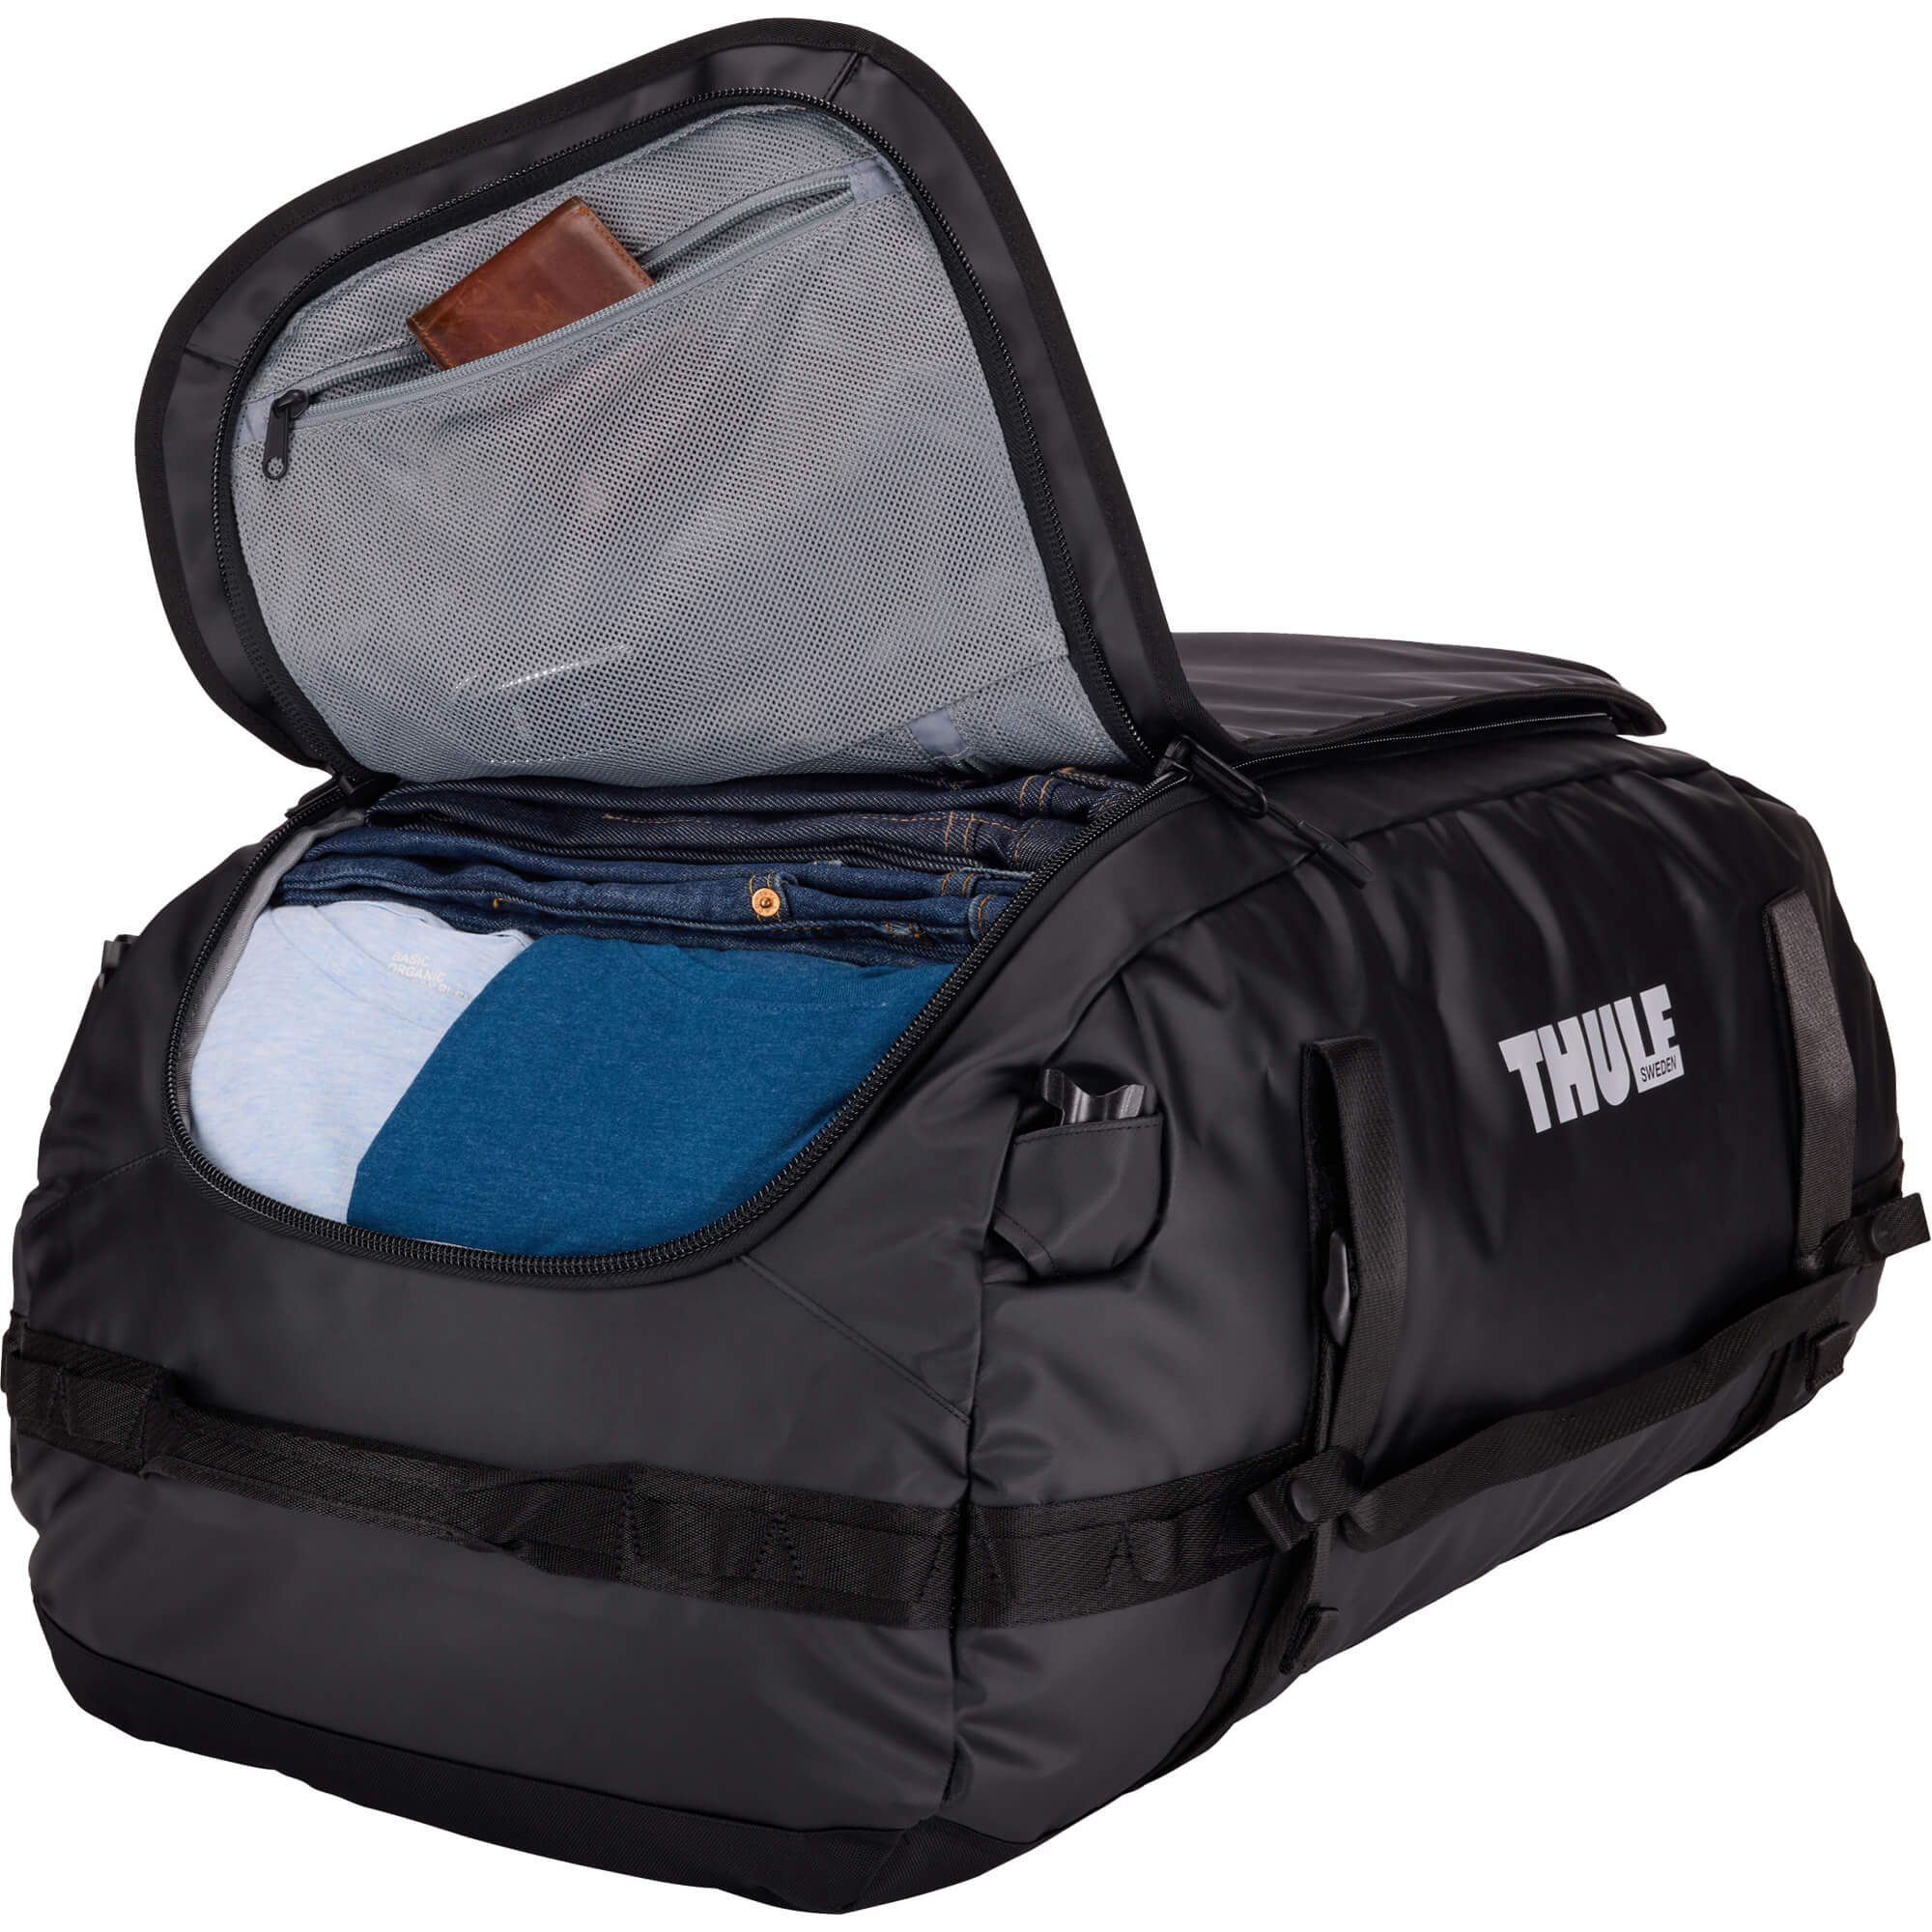 Thule Chasm 90L Duffel Travel Bag